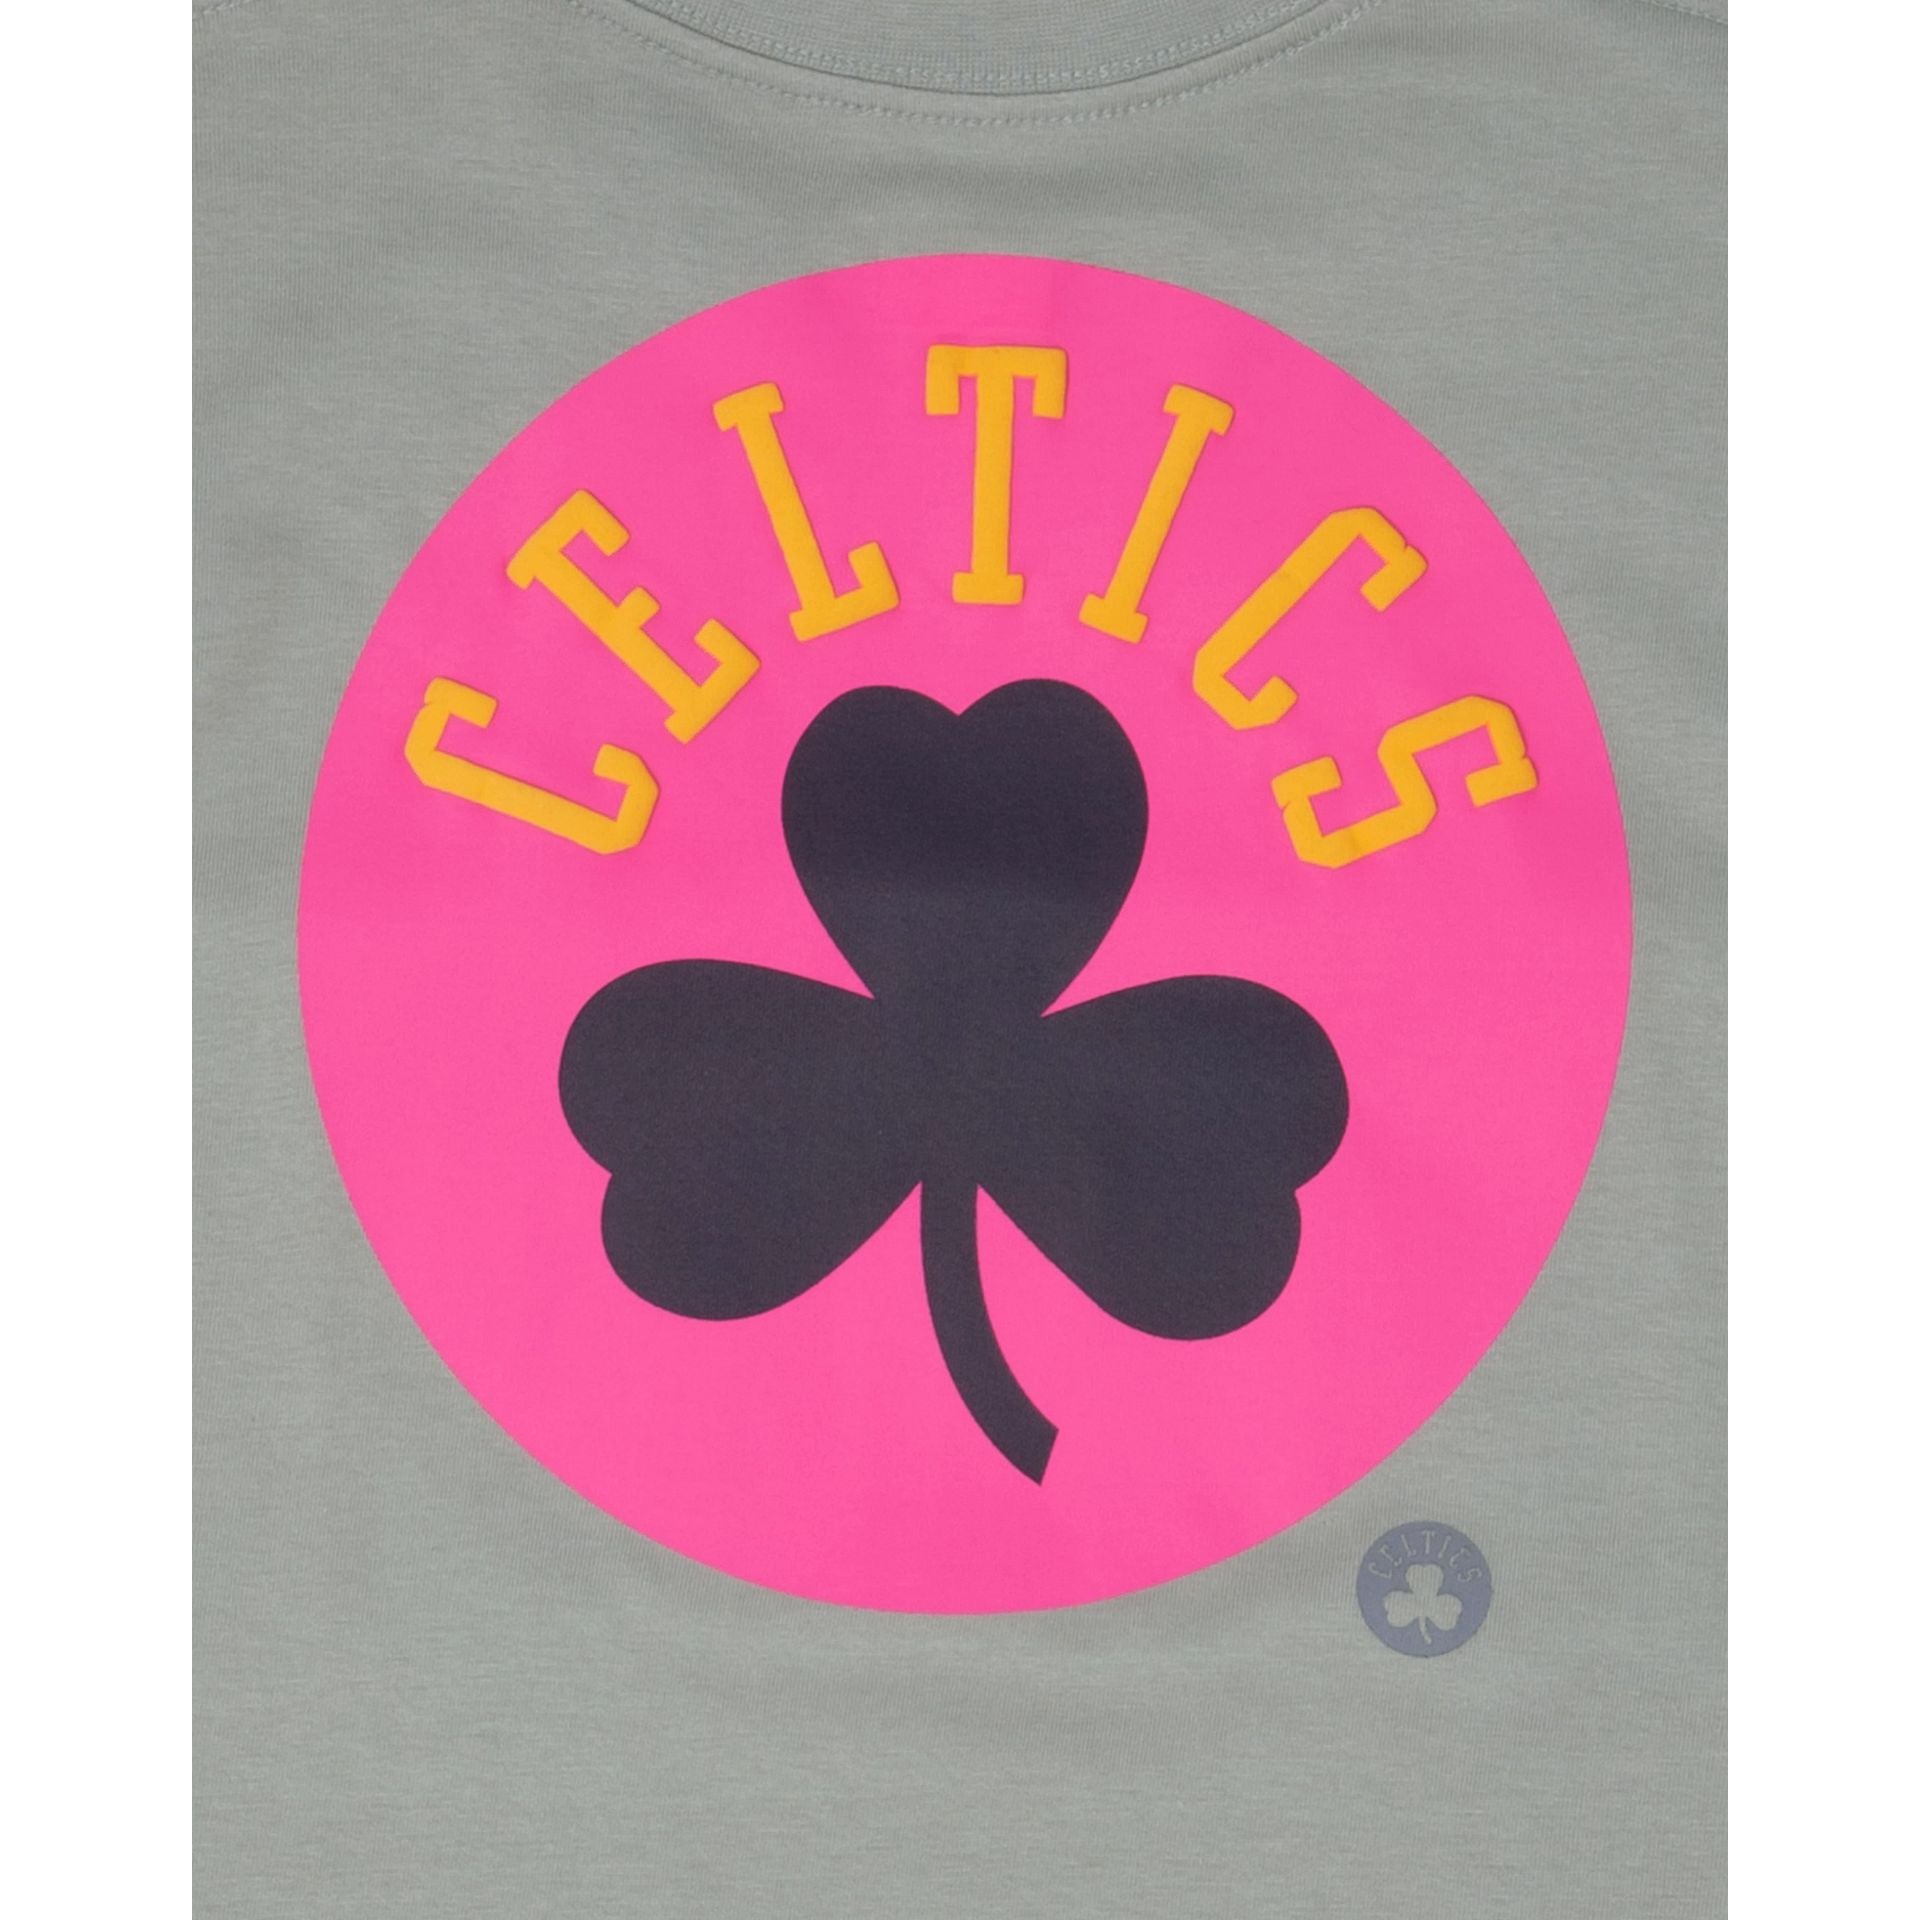 Boston Celtics Sport Night Women's Hoodie